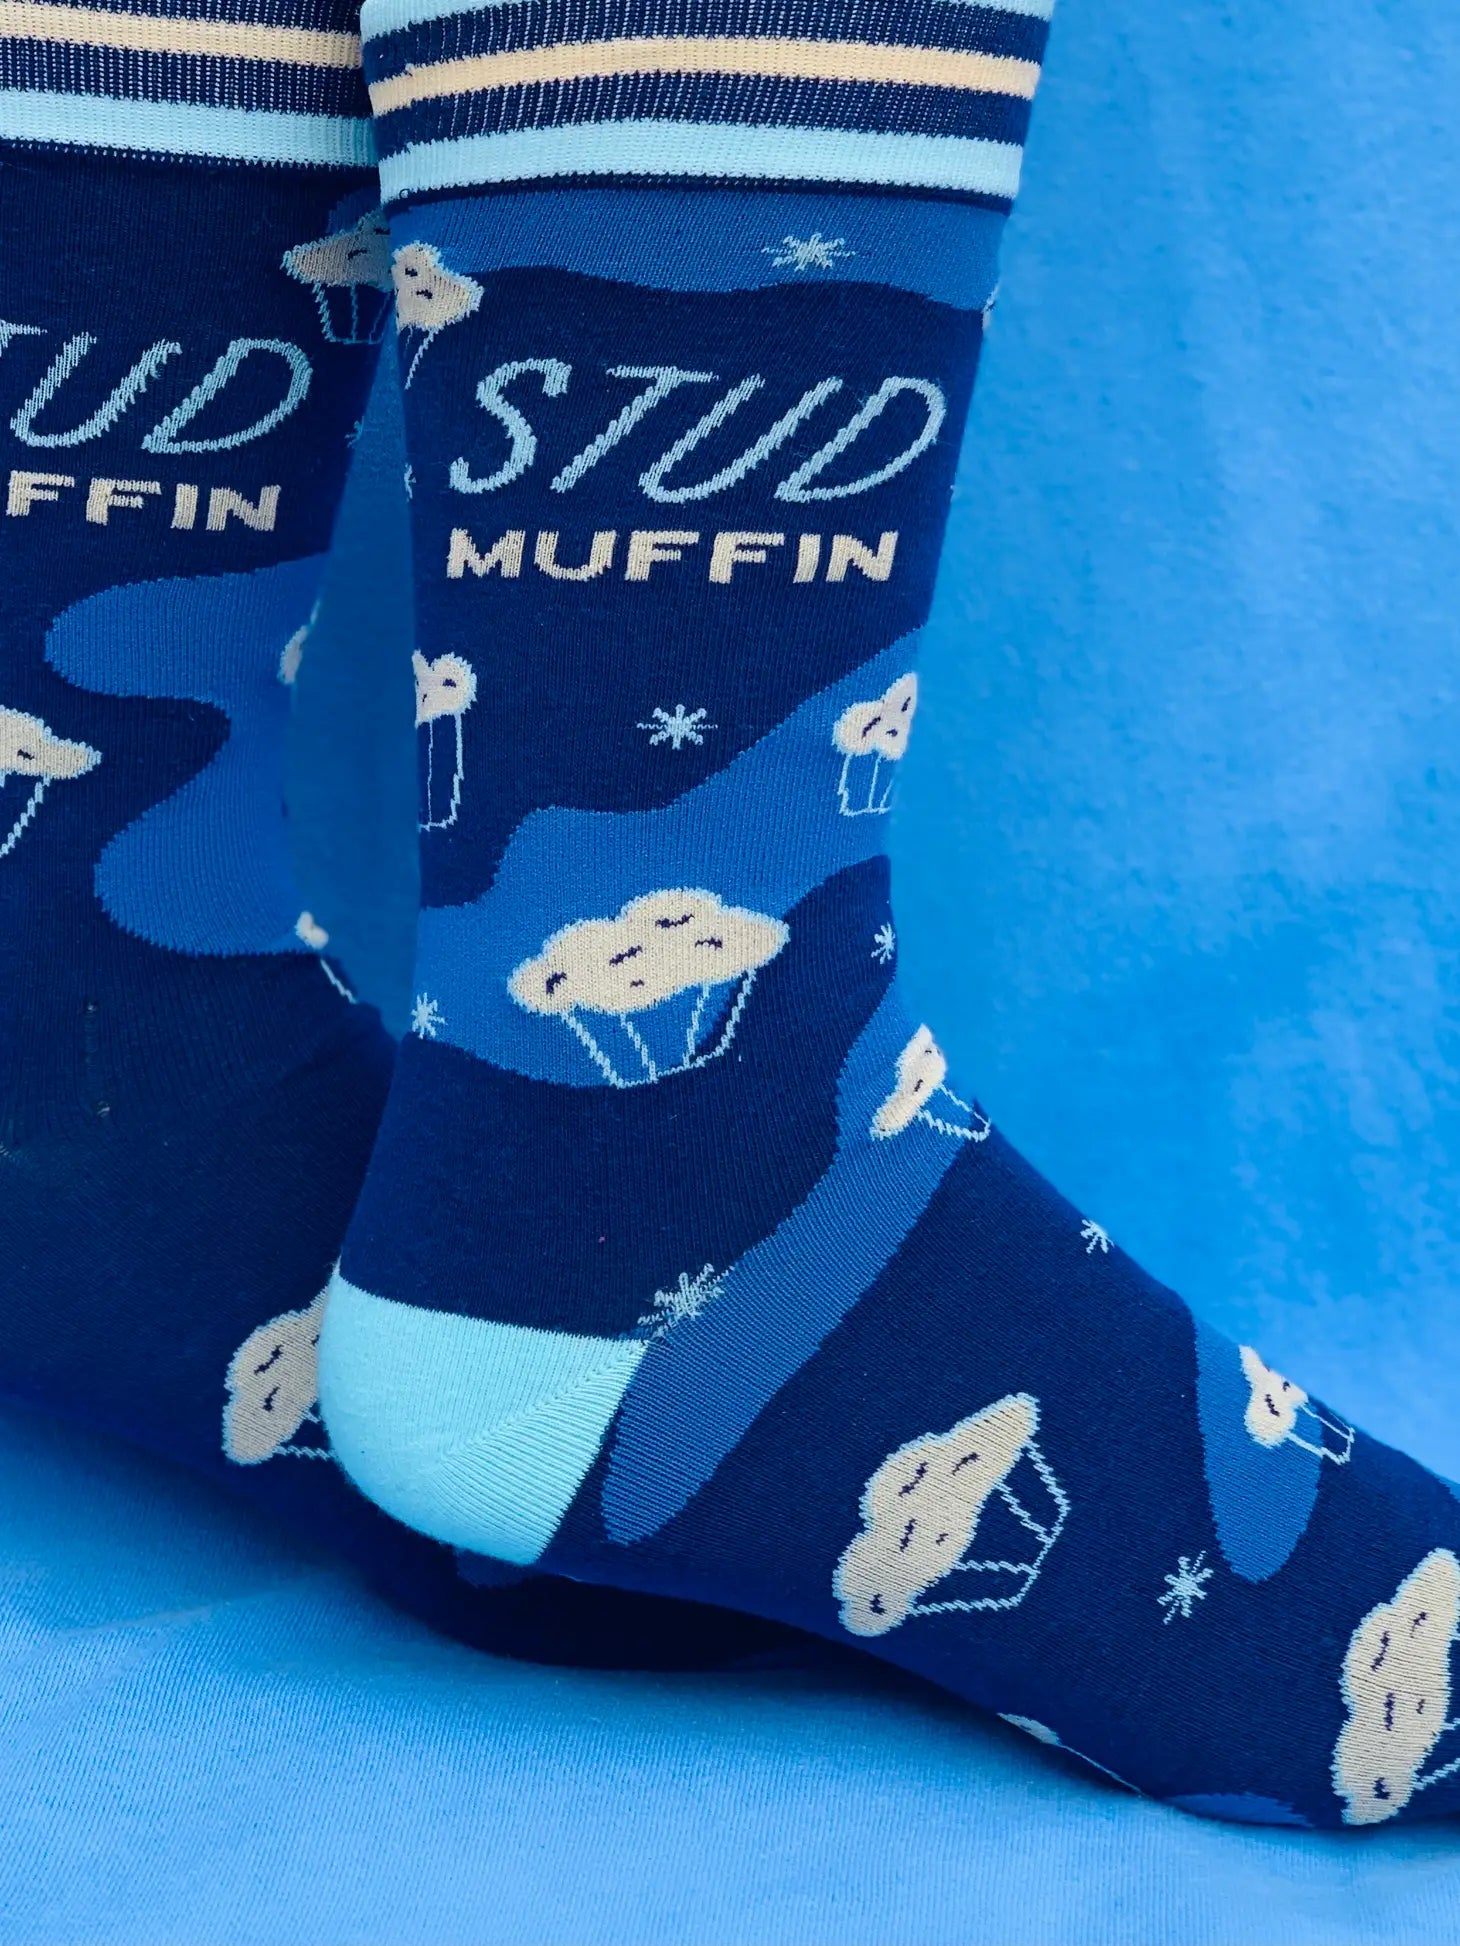 Groovy Things Co. - Stud Muffin Socks